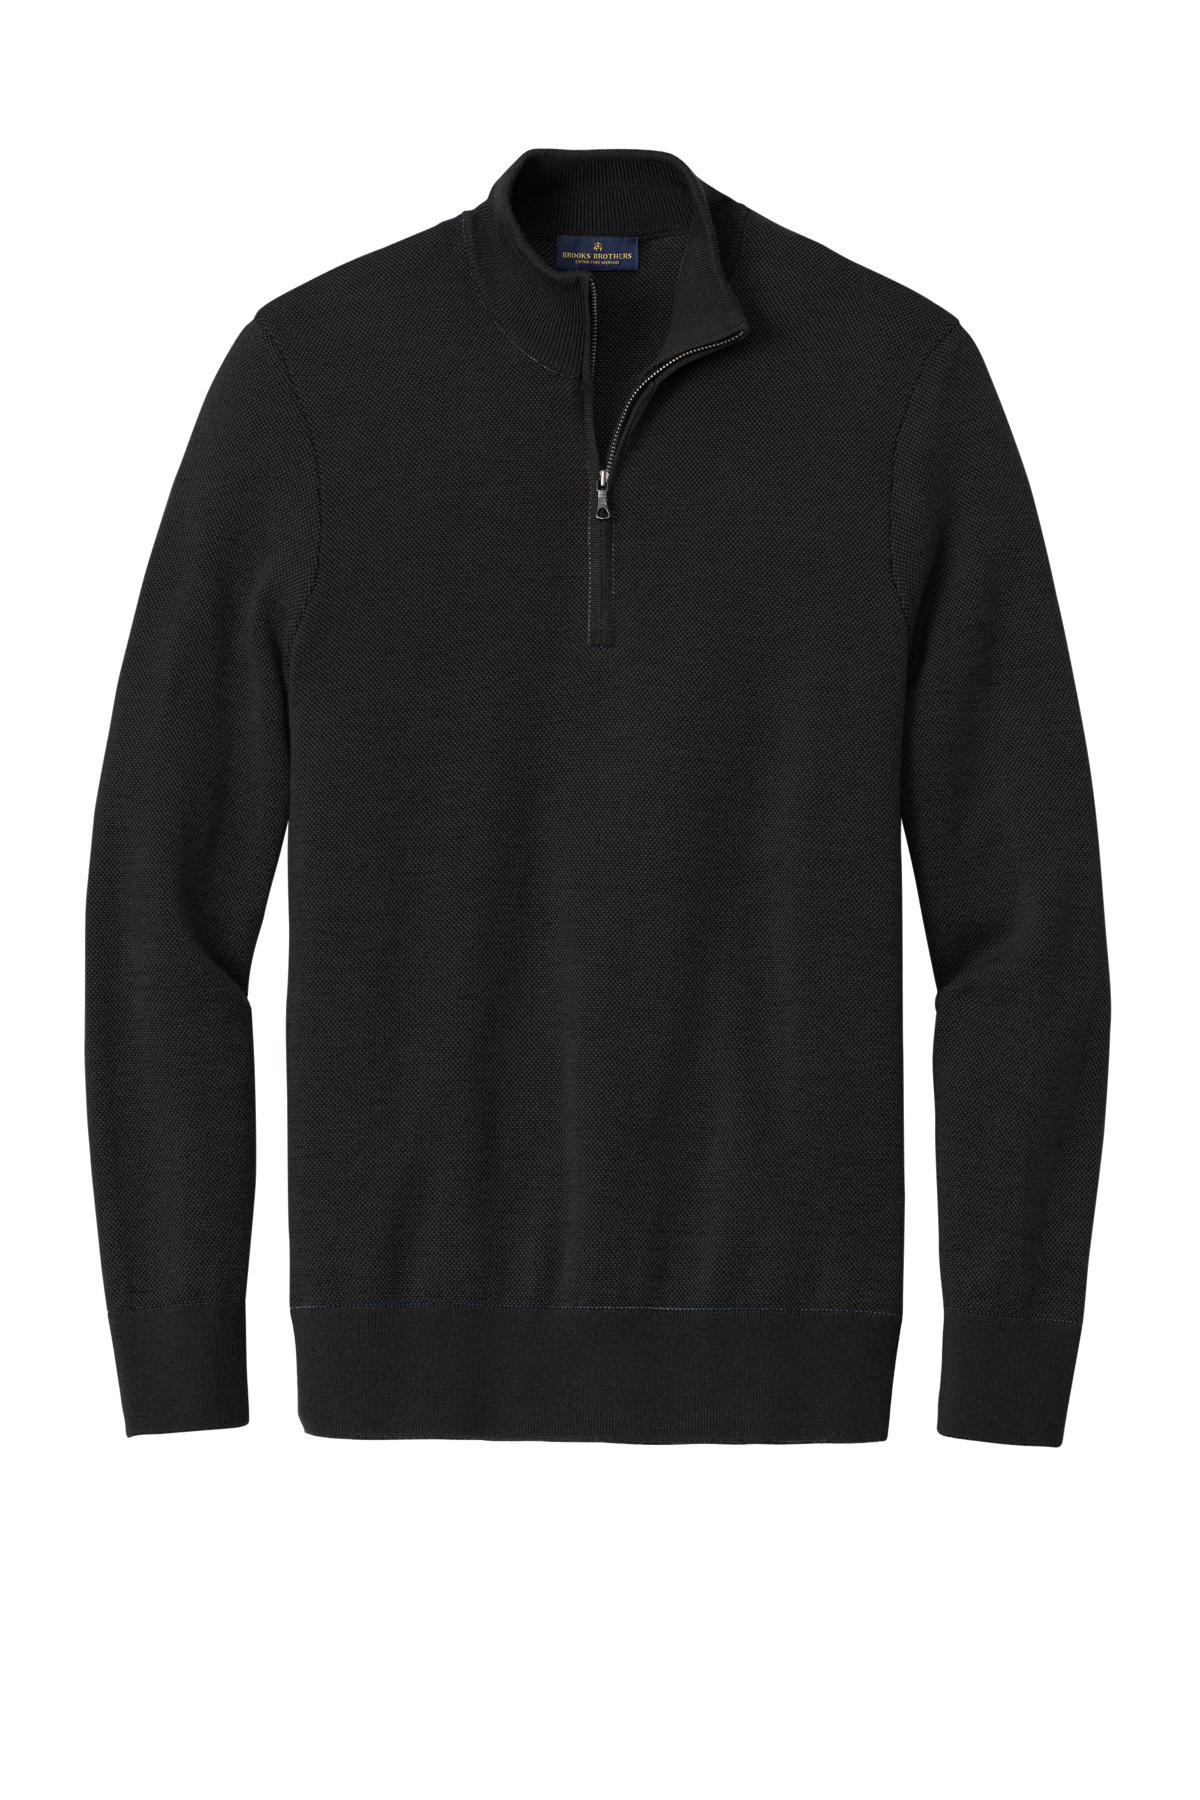 Brooks Brothers Washable Merino Birdseye 1/4-Zip Sweater | Product ...